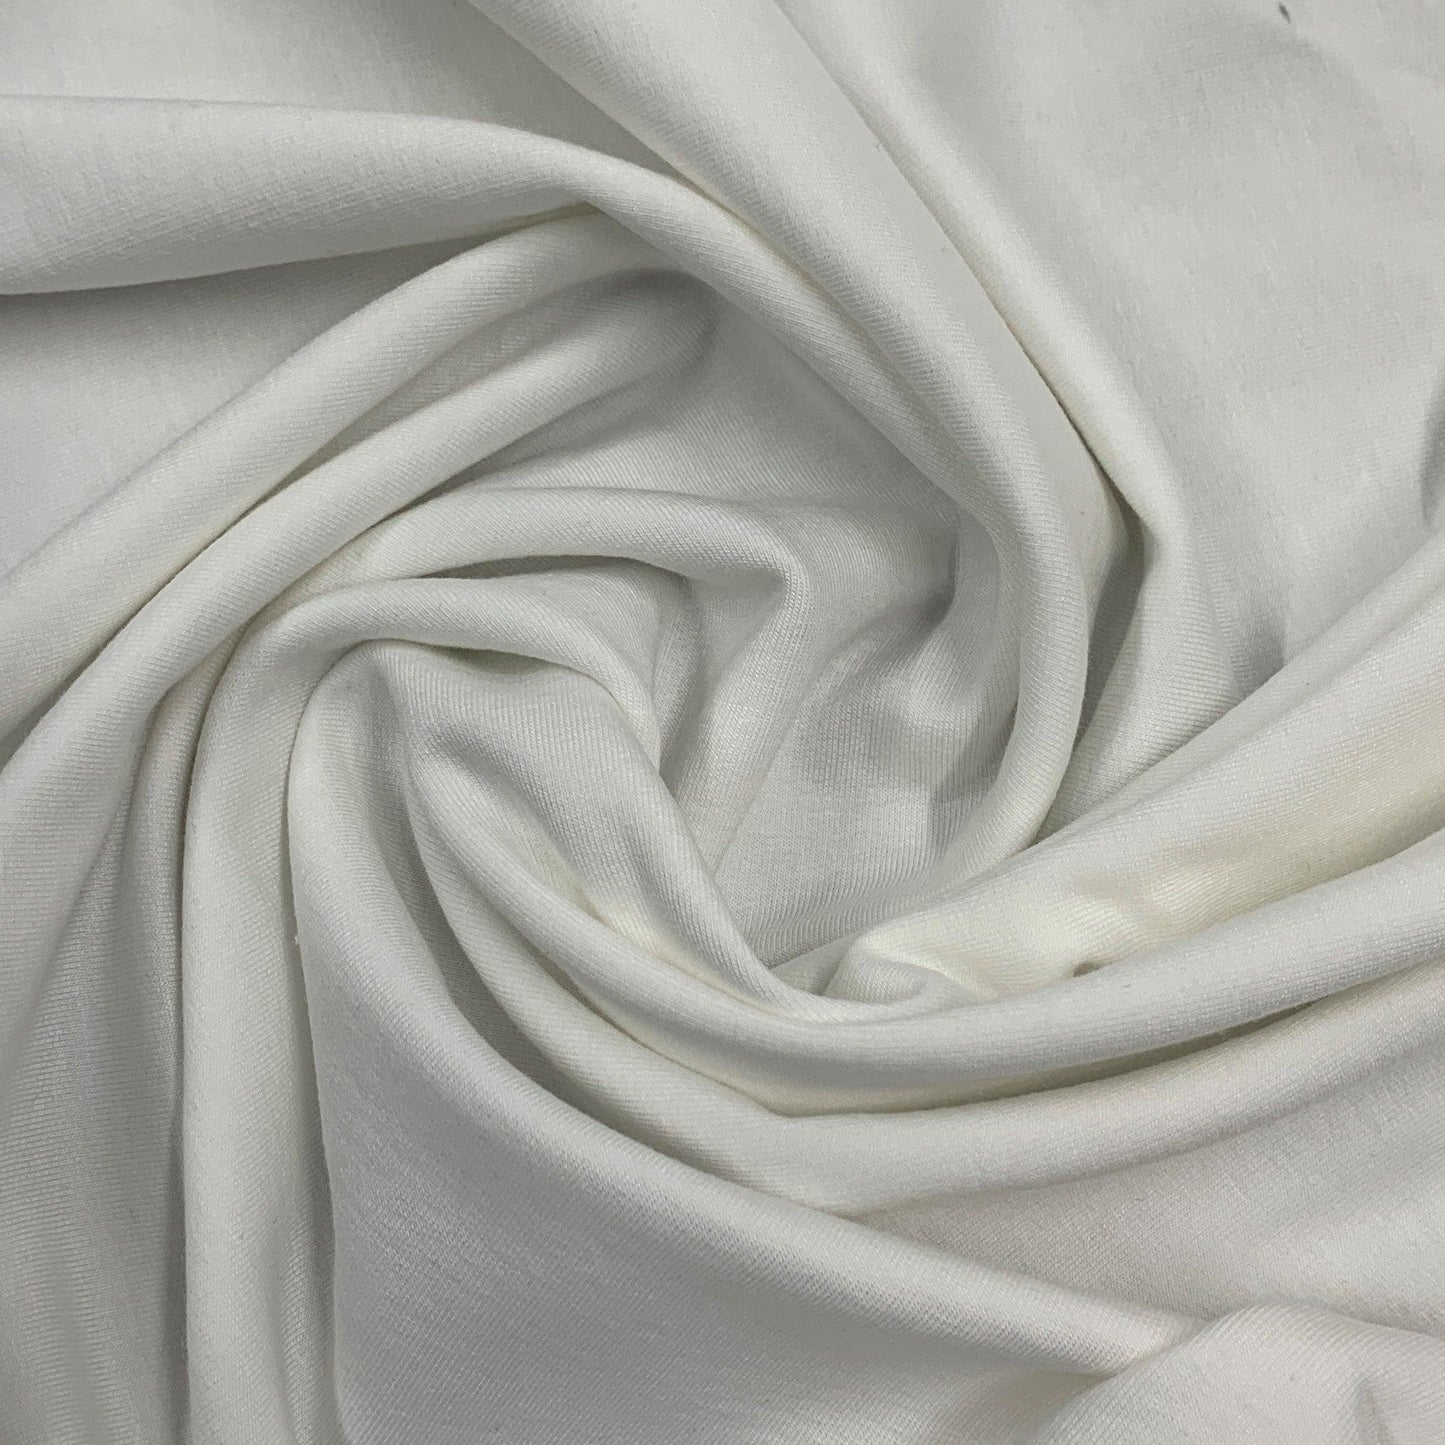 Off-White Bamboo Stretch Fleece Fabric - 300 GSM - Nature's Fabrics